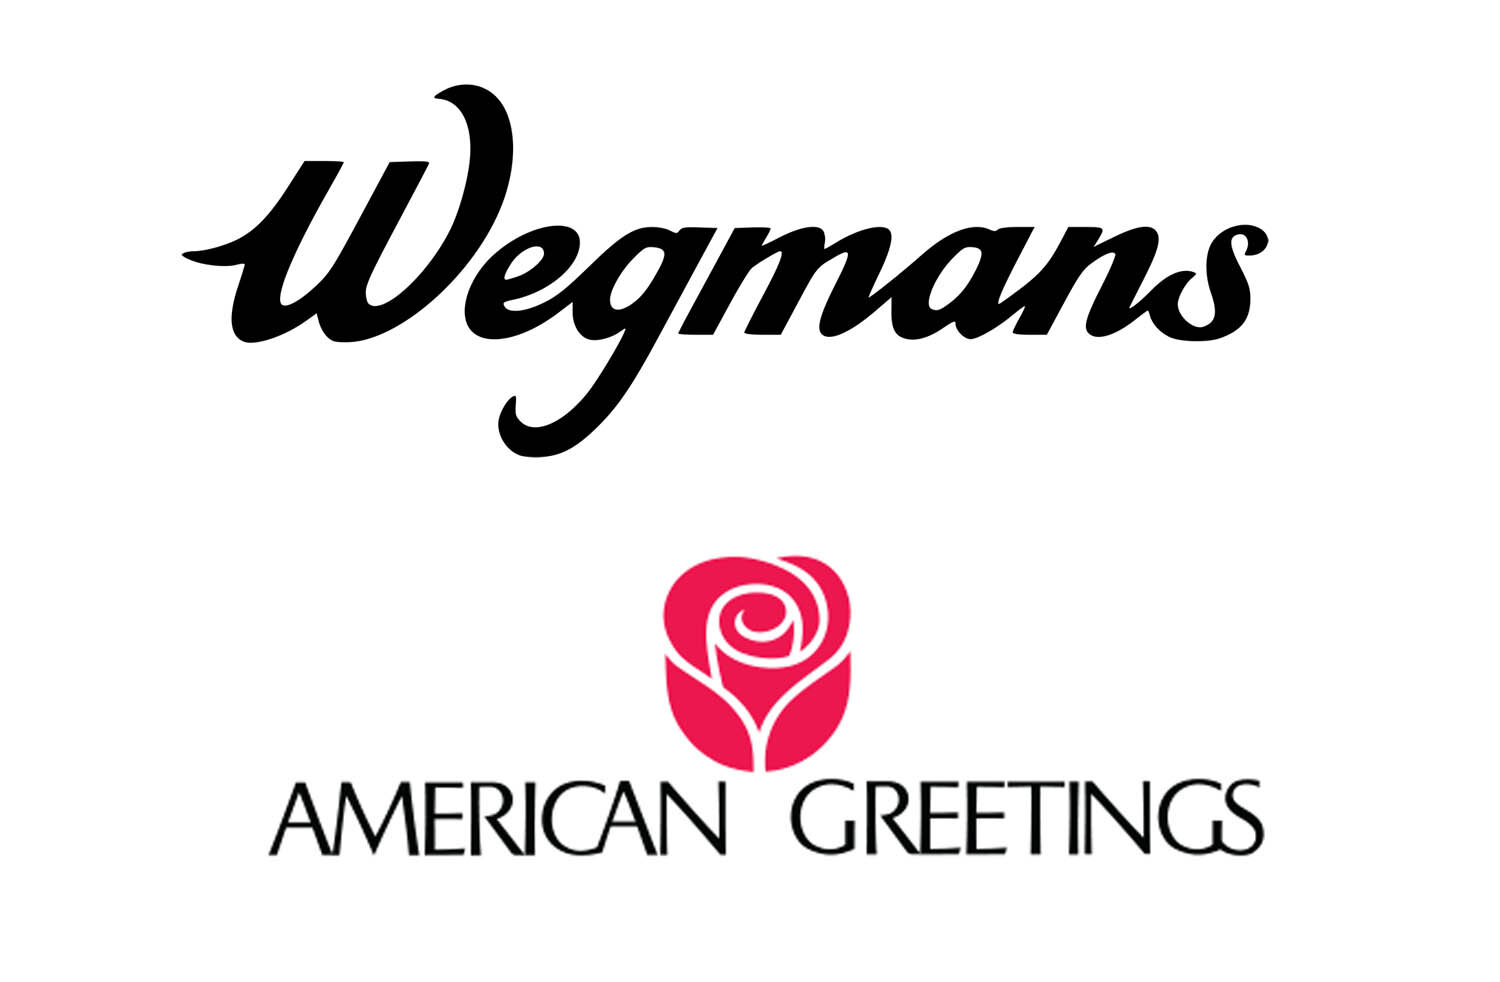 Wegmans American Greetings